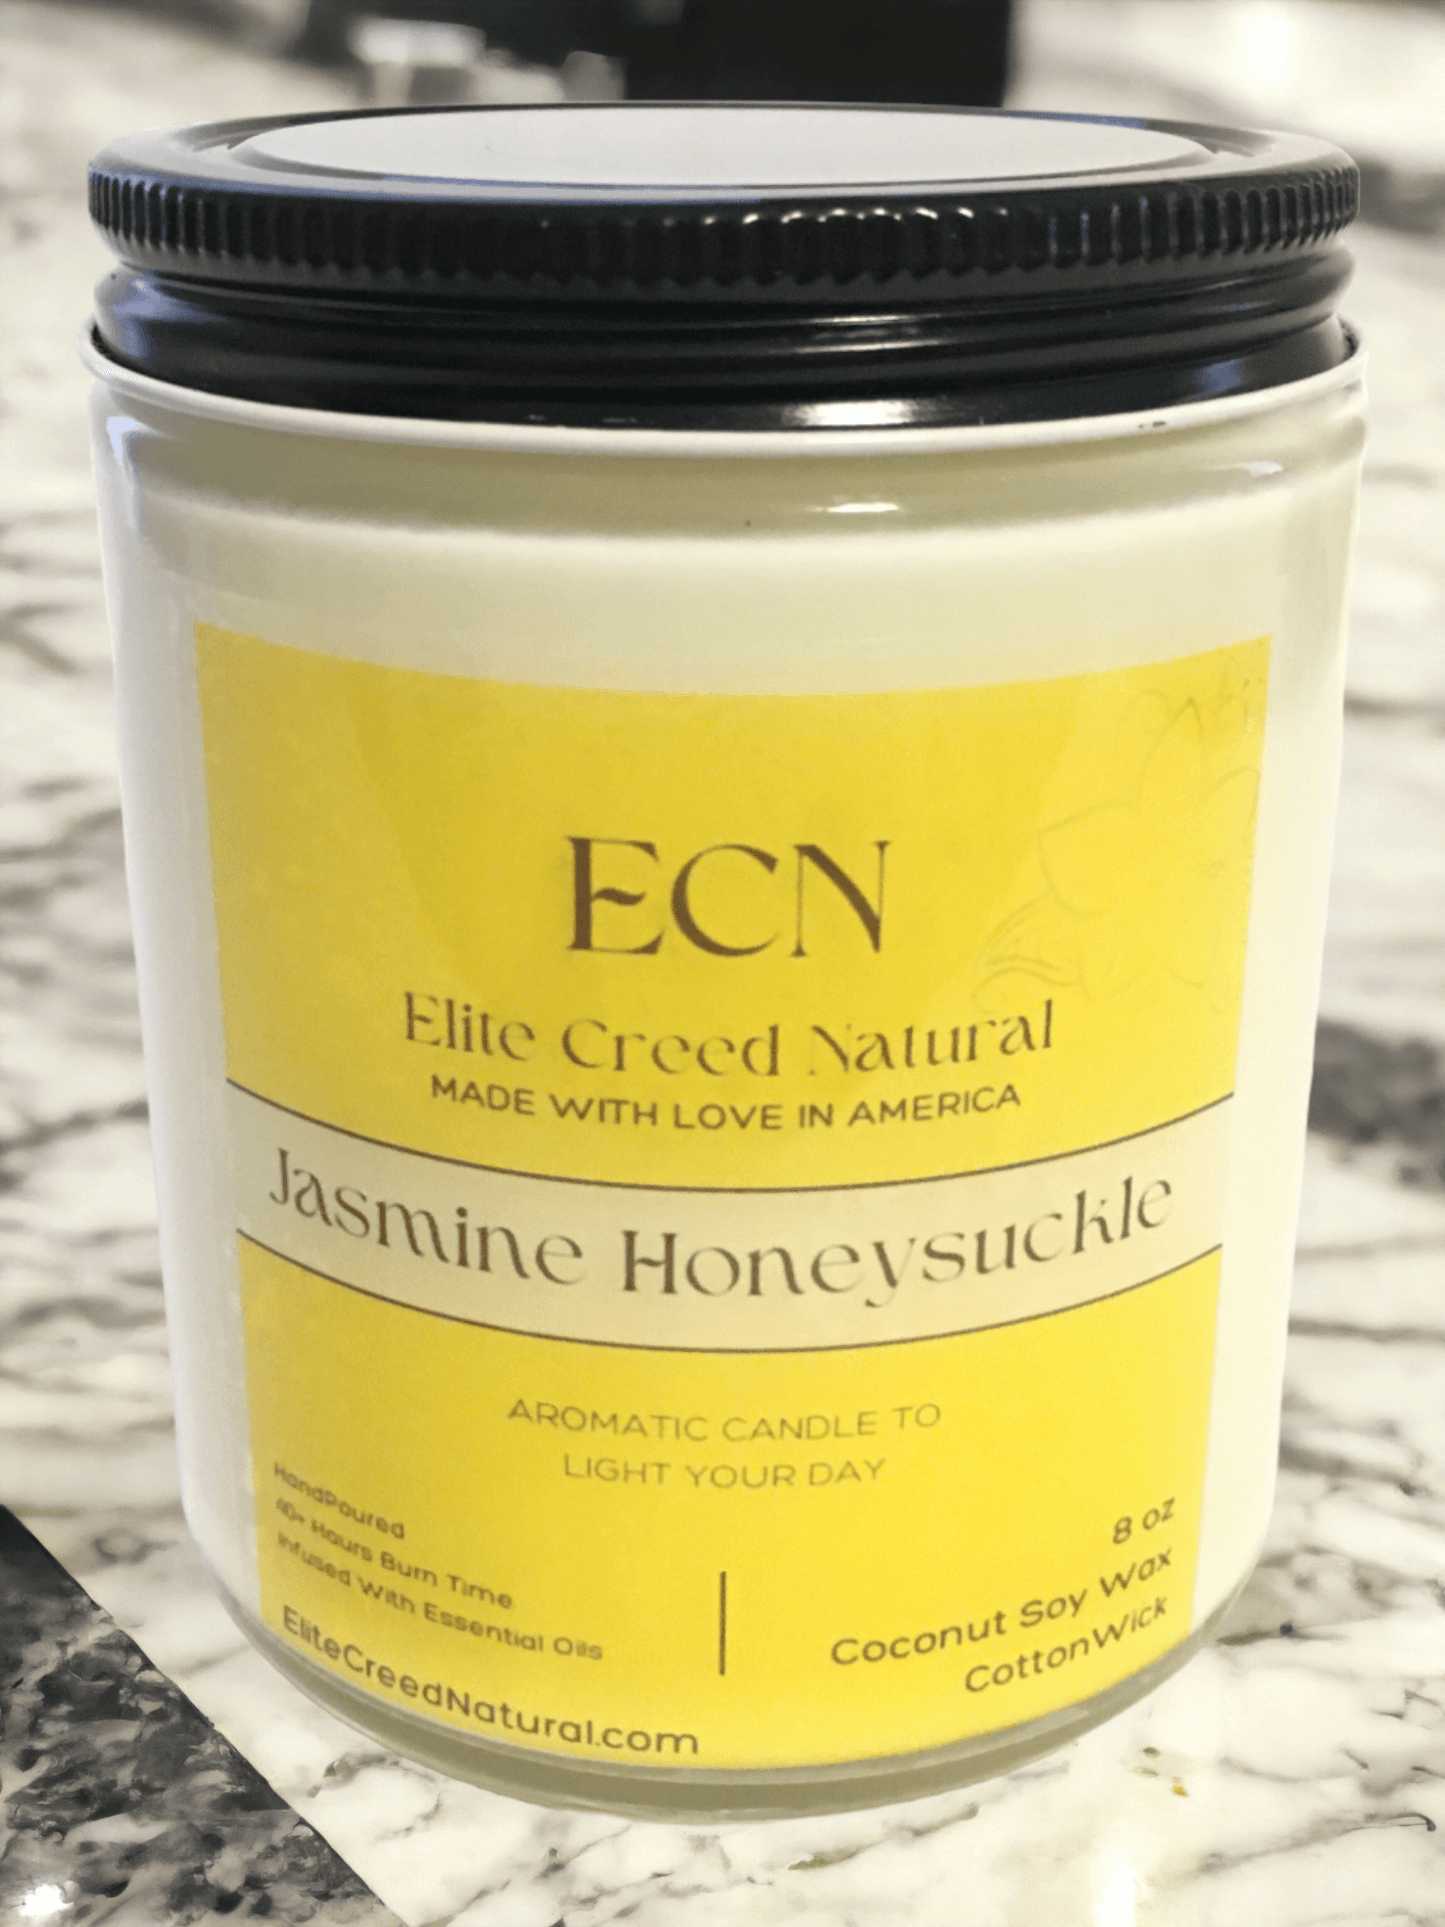 Jasmine Honeysuckle Candle - Elite Creed Natural